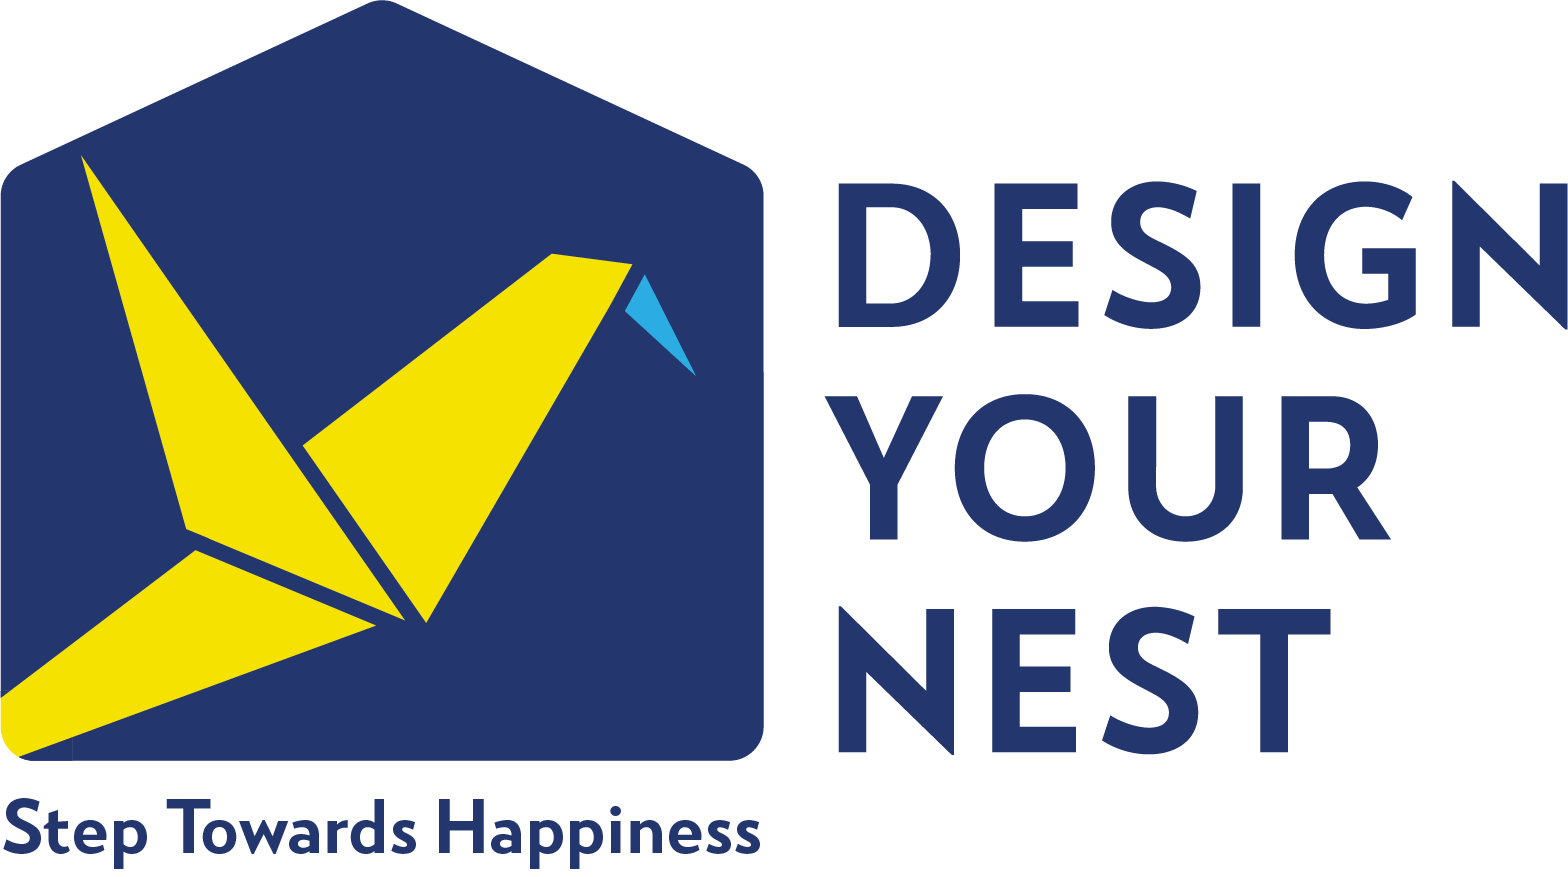 Design your Nest